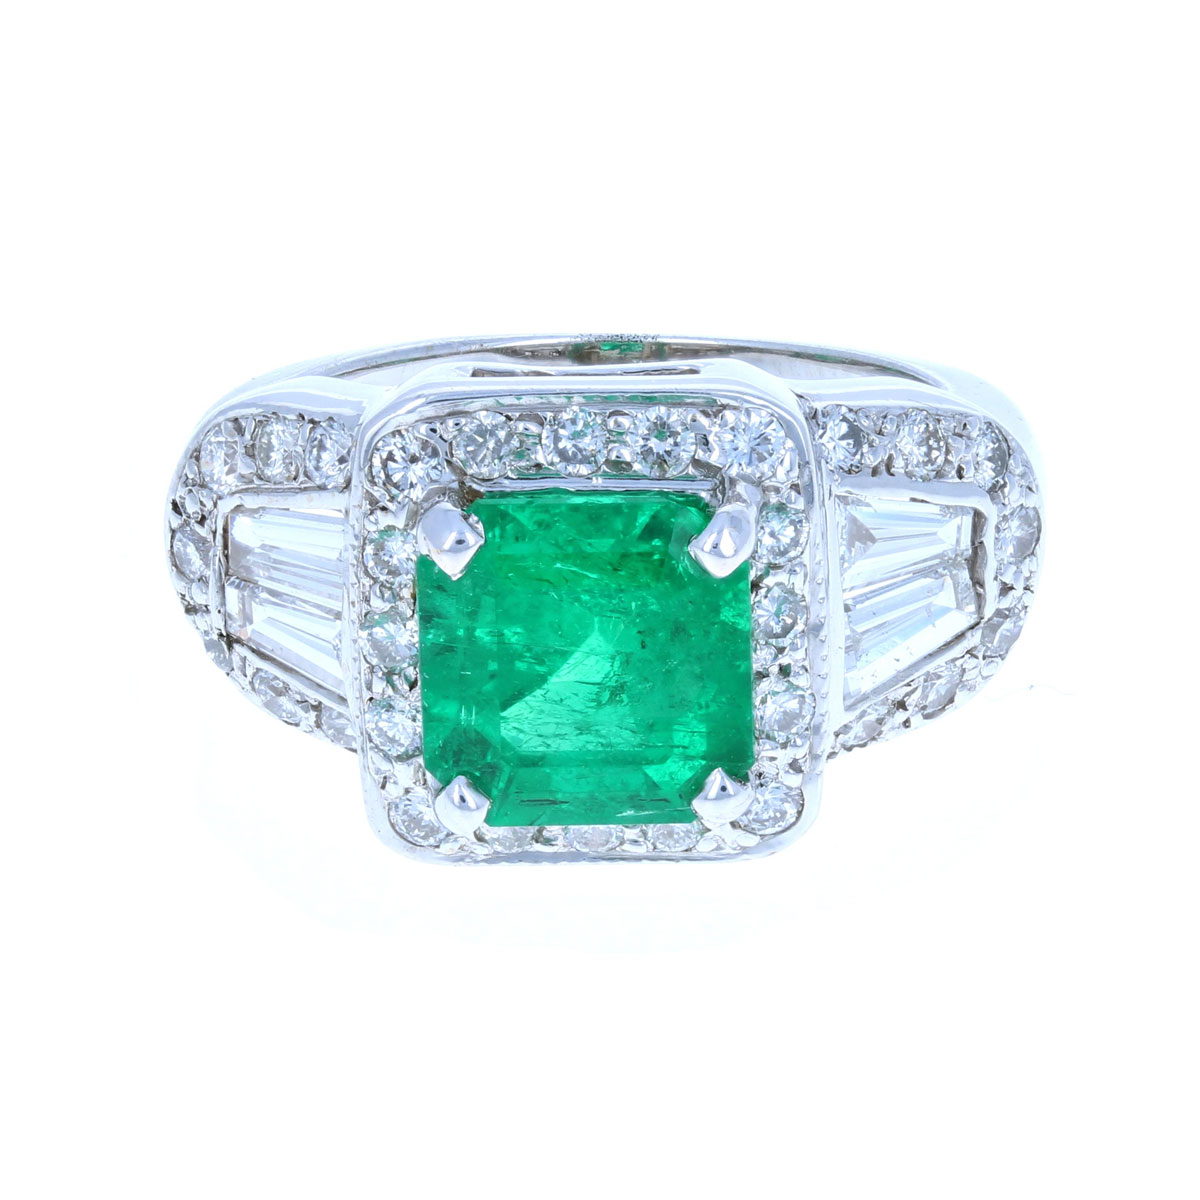 Square Emerald & Diamond Ring 18KT